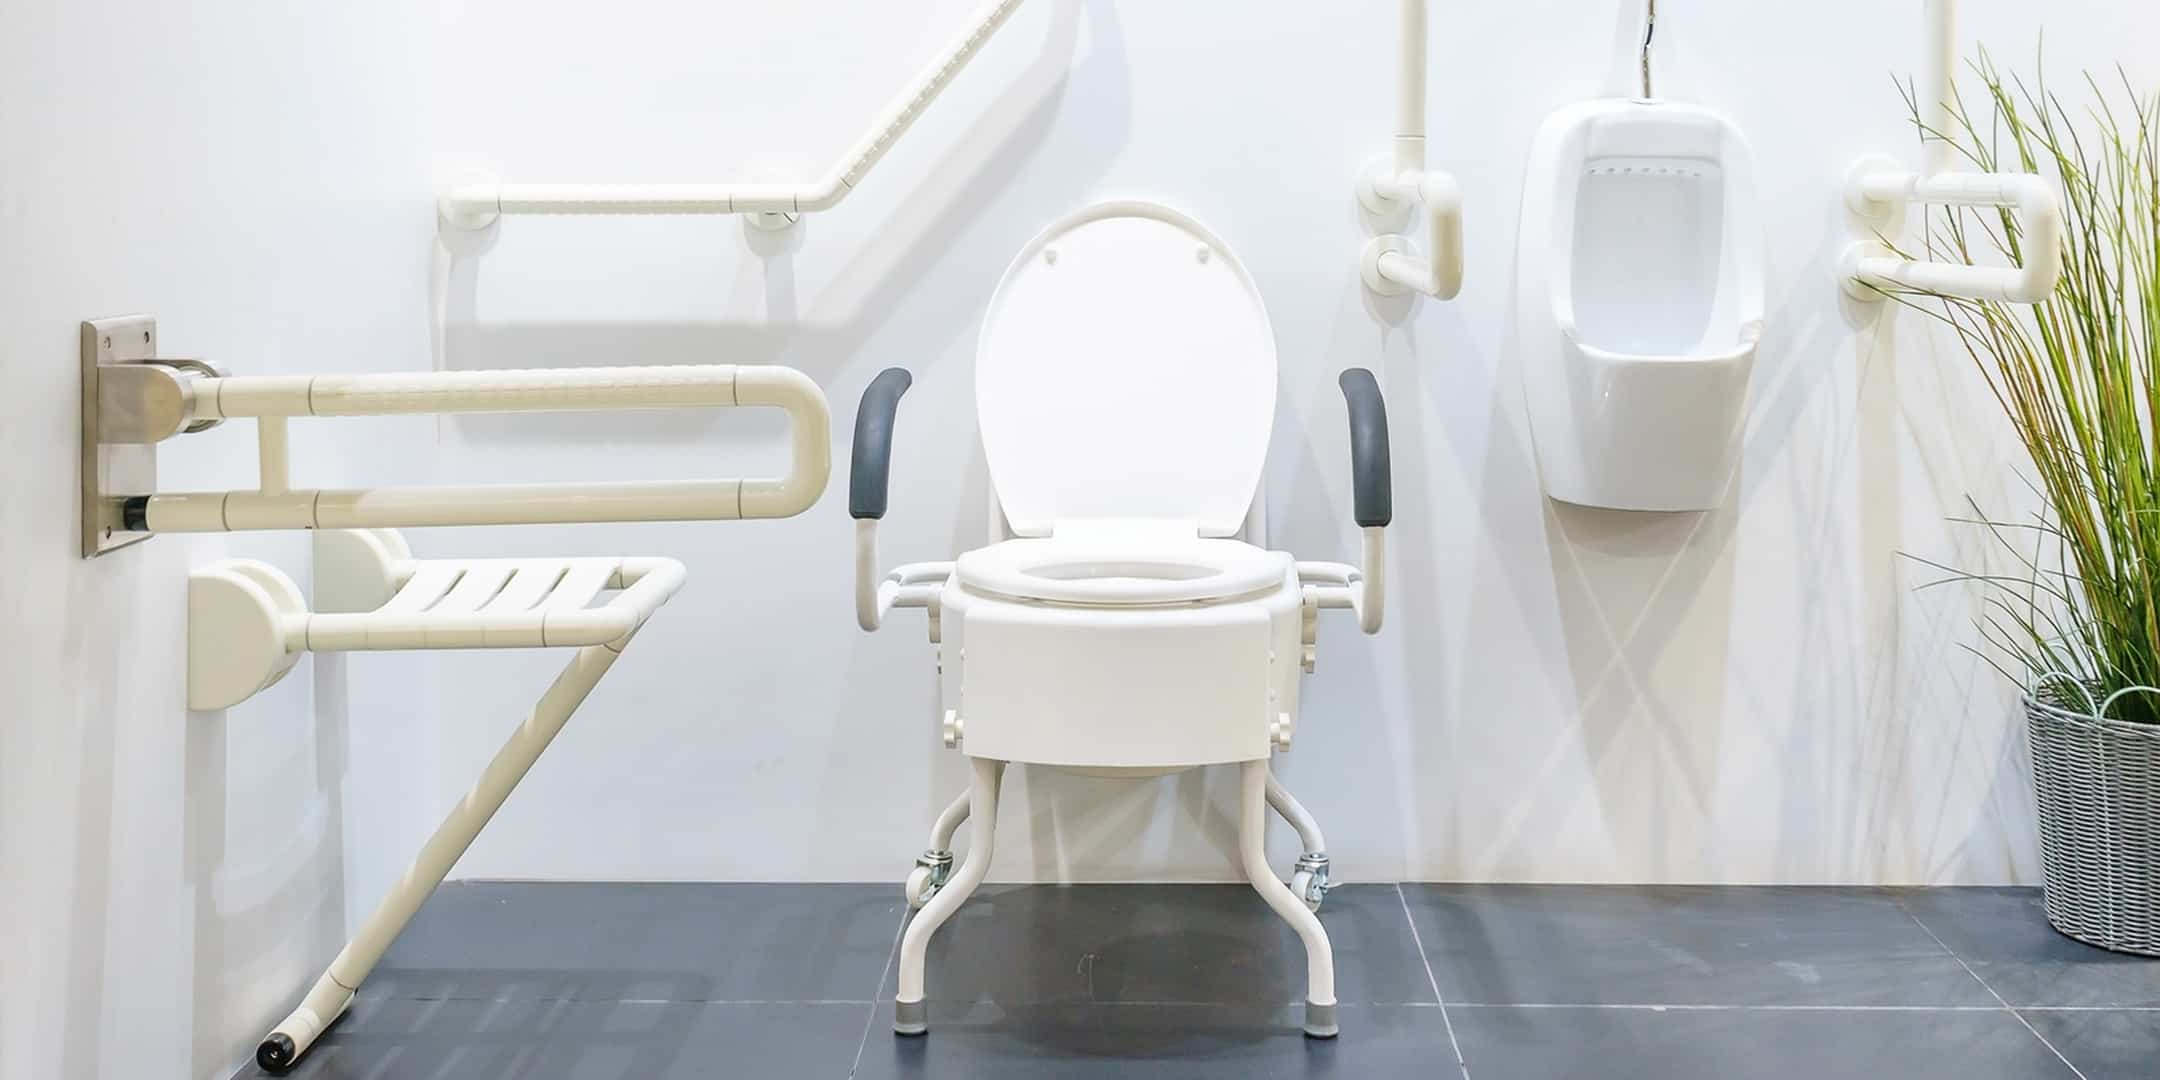 Nova Easy Air Adjustable Toilet Seat Riser